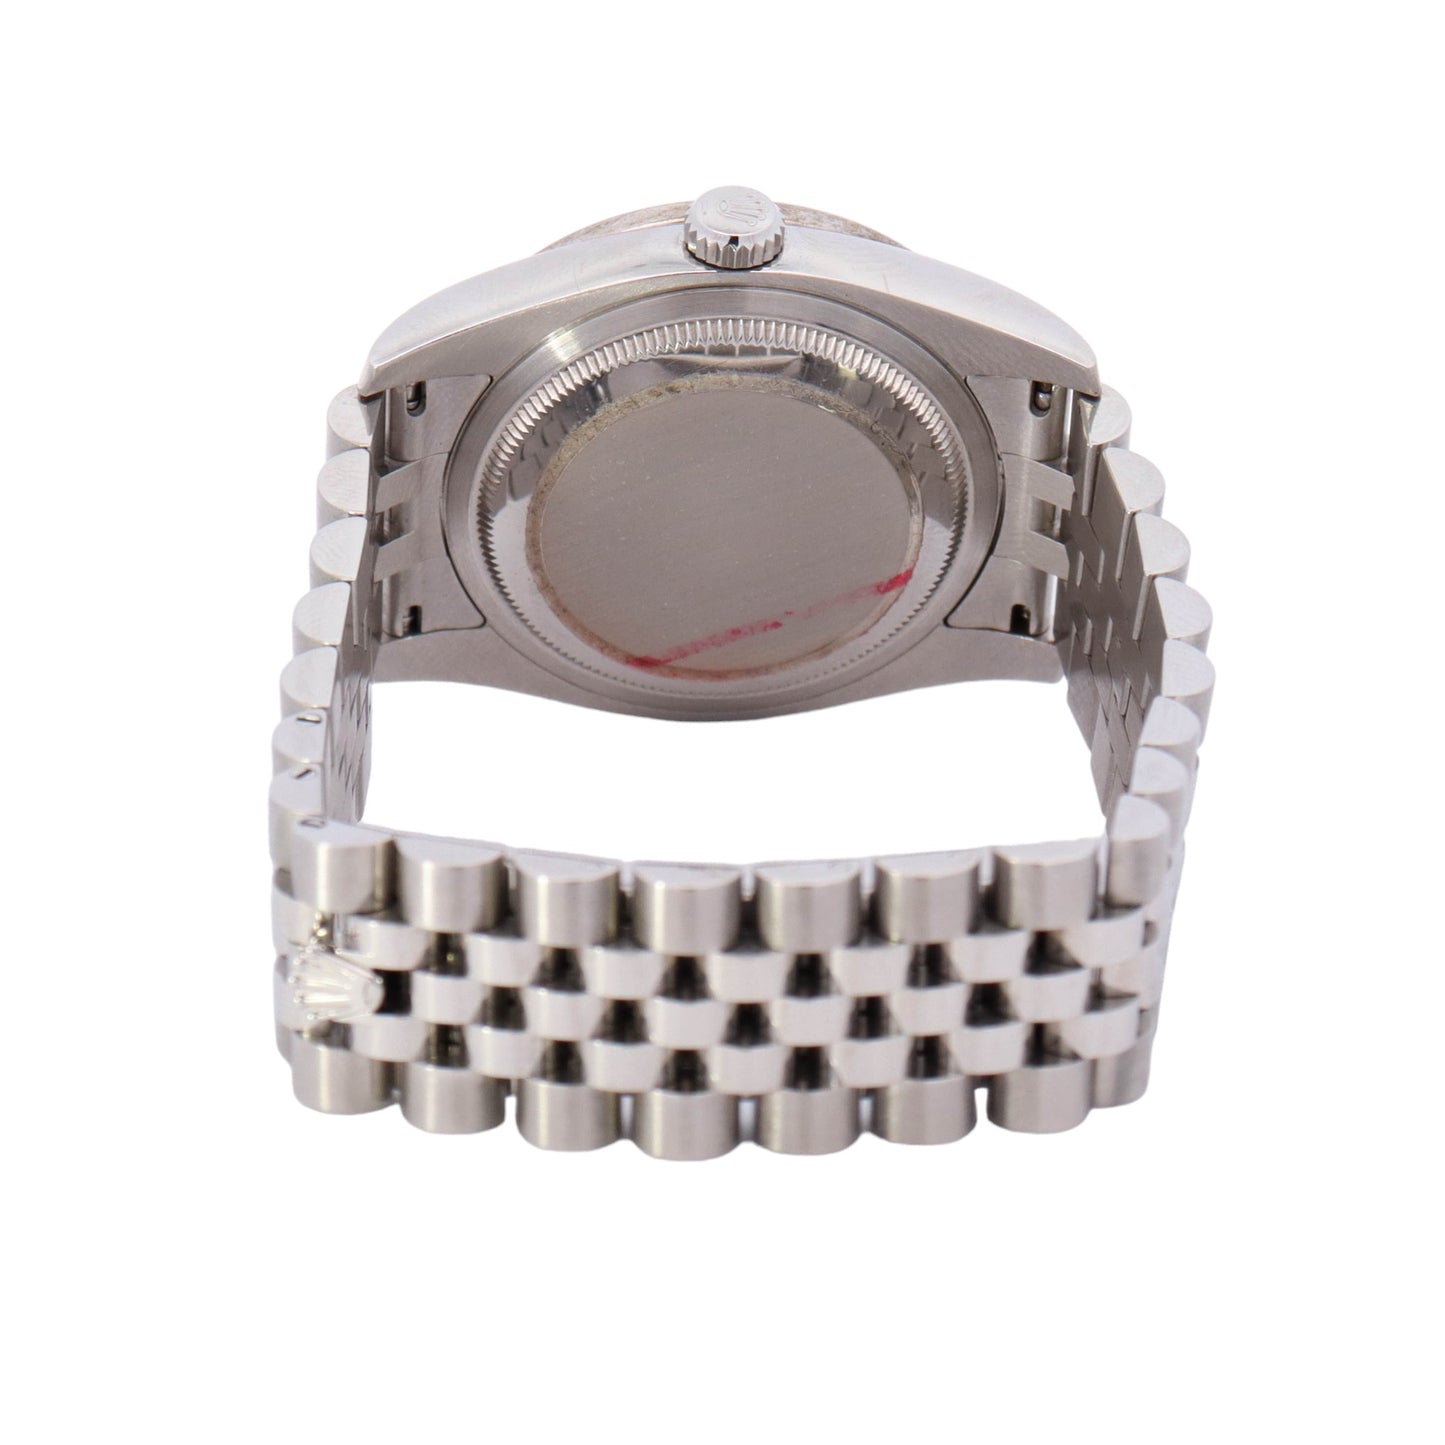 Rolex Datejust Stainless Steel 36mm White Diamond Dot Dial Watch Reference# 116234 - Happy Jewelers Fine Jewelry Lifetime Warranty